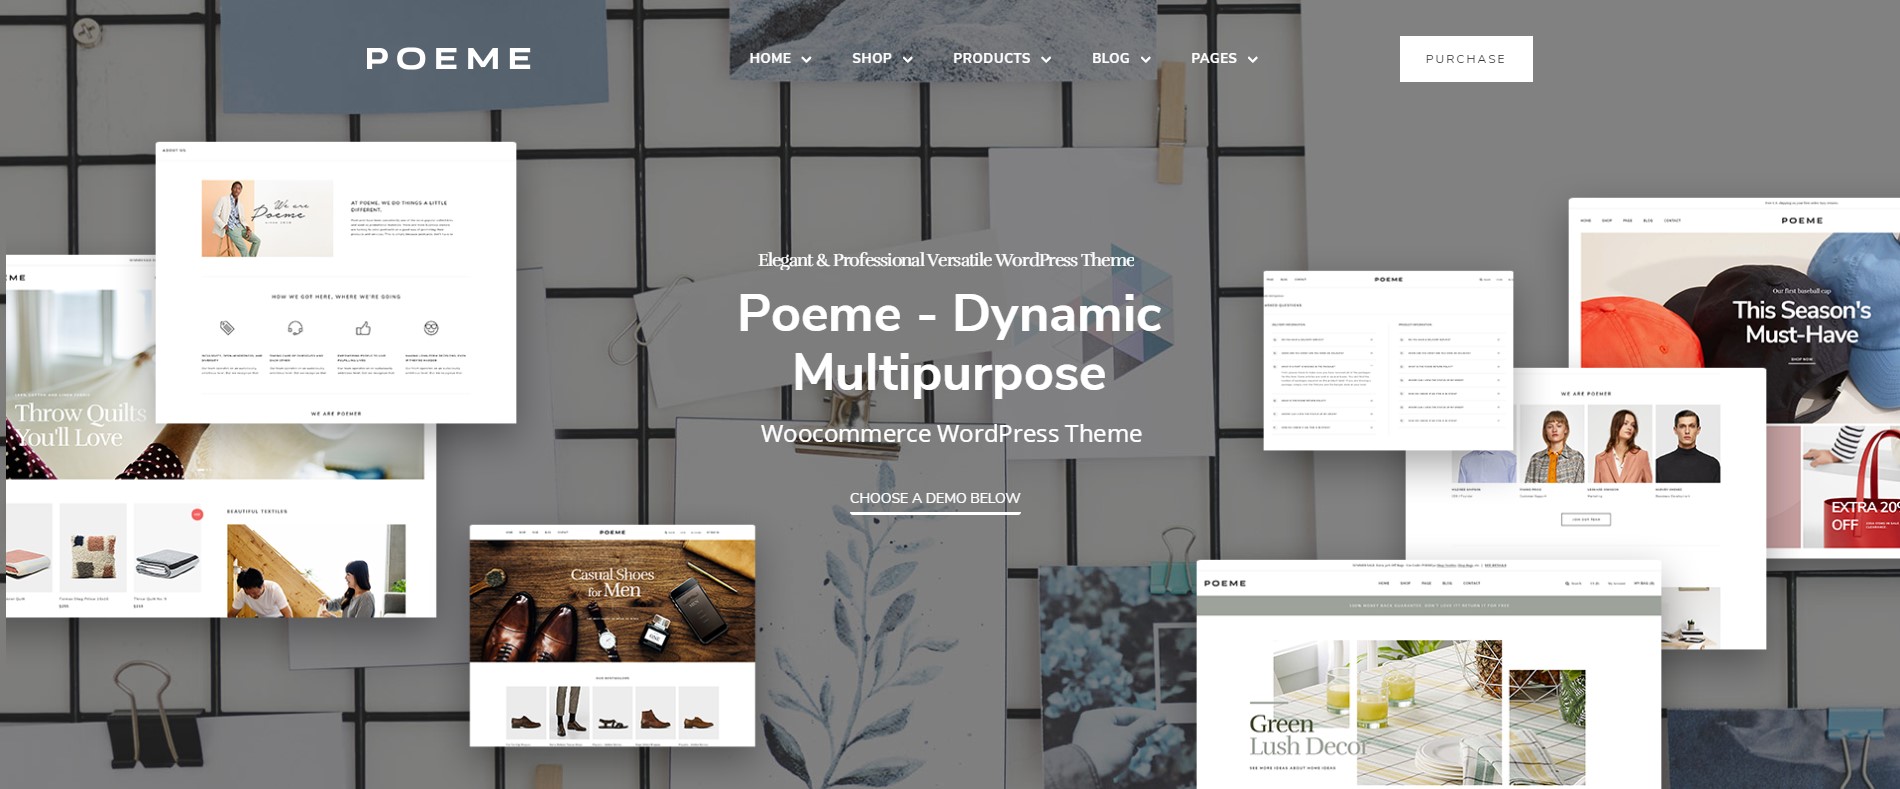 Poeme - Dynamic Multipurpose WooCommerce WordPress Theme